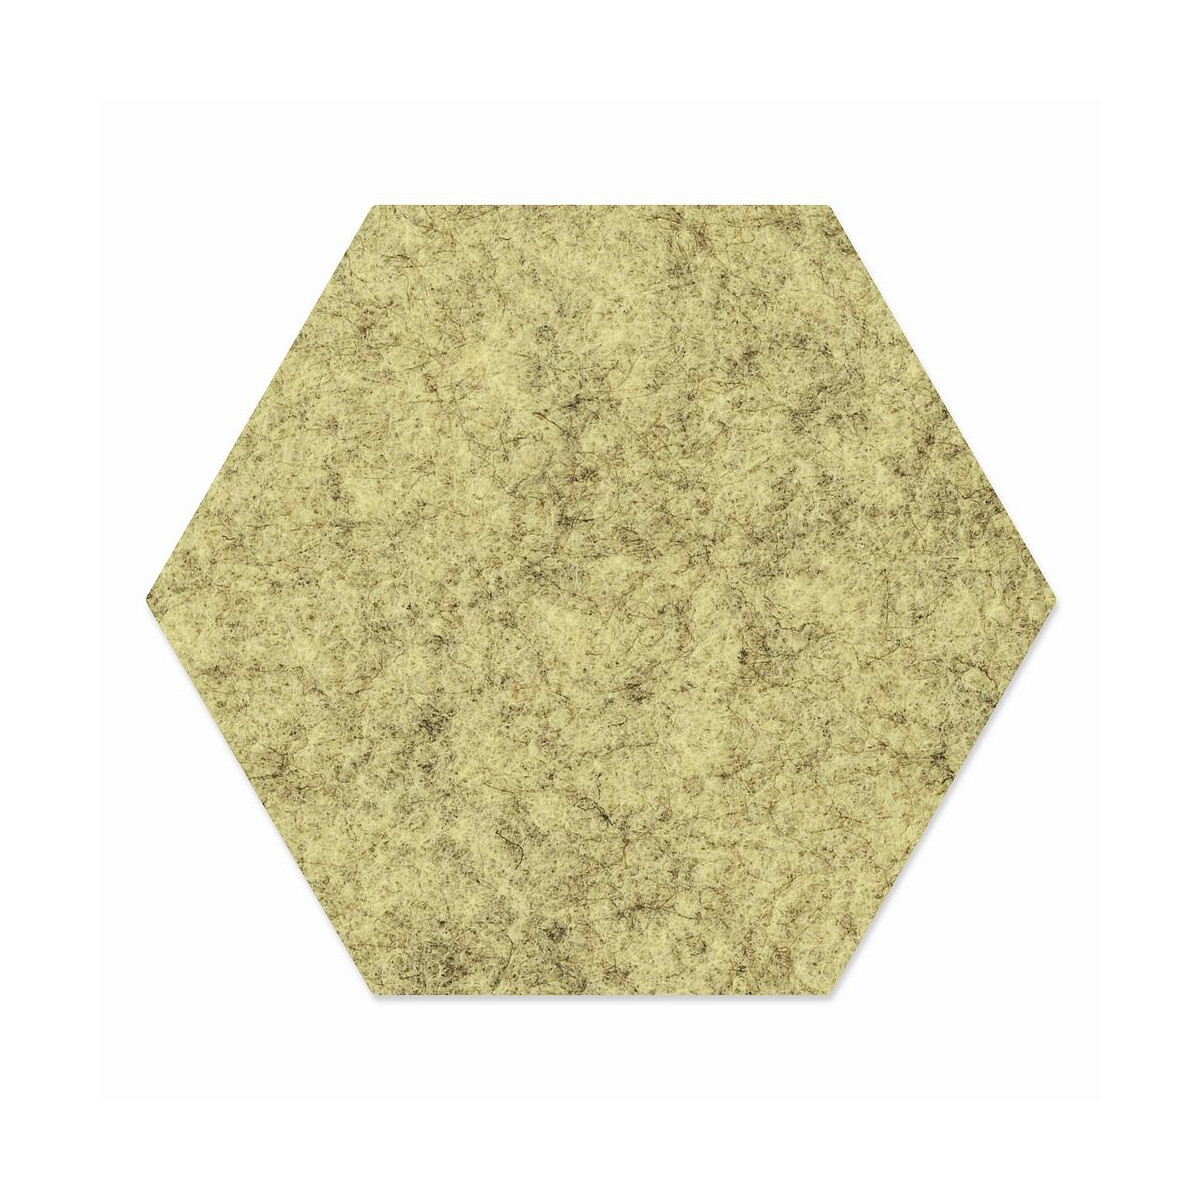 1 x FILZ Untersetzer Wabe, Hexagon 21 cm - muschel meliert